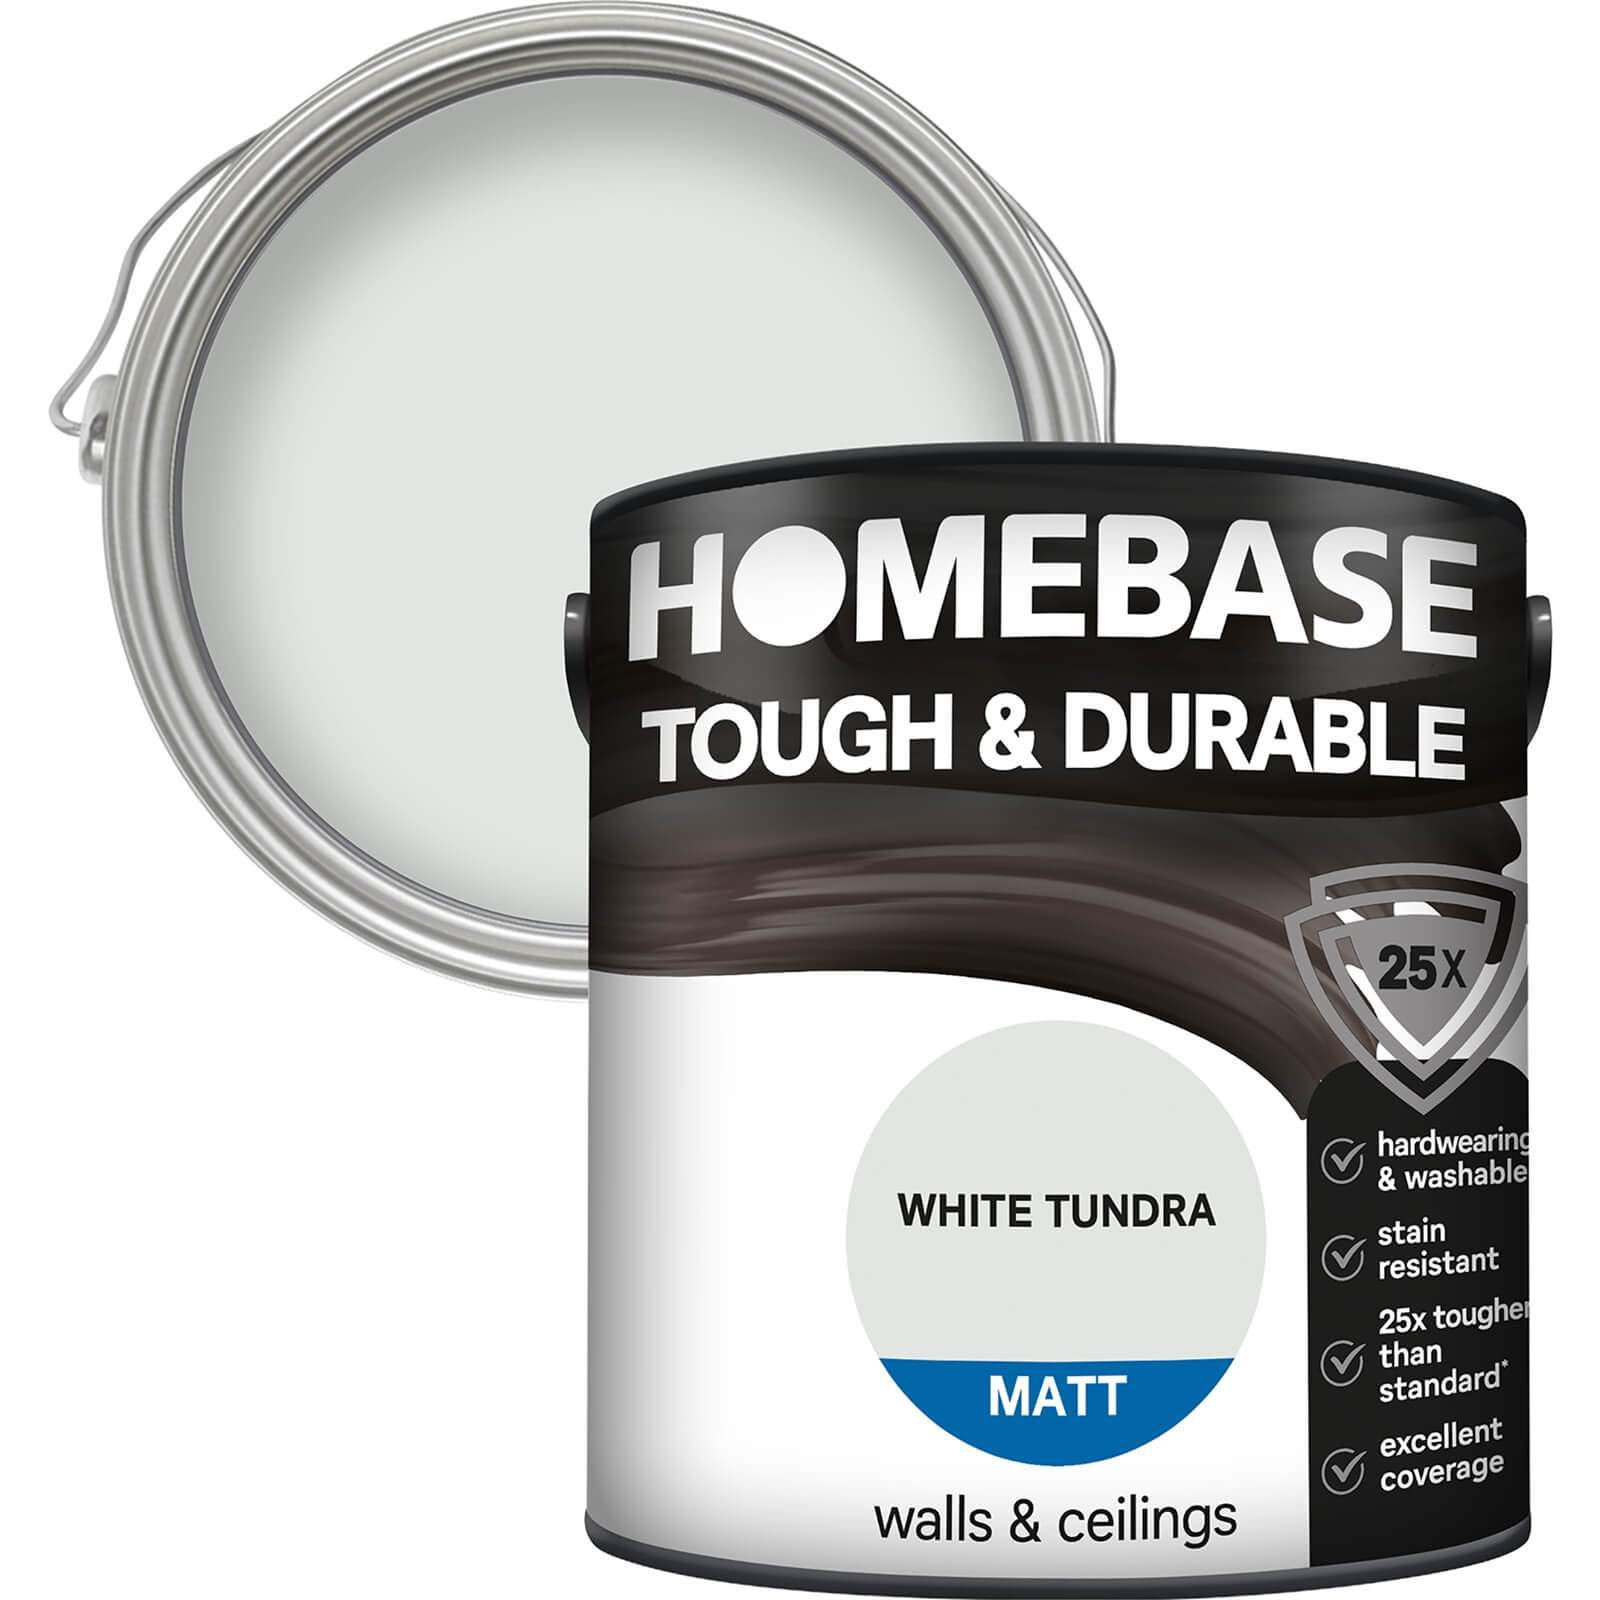 Homebase Tough & Durable Matt Paint White Tundra - 2.5L